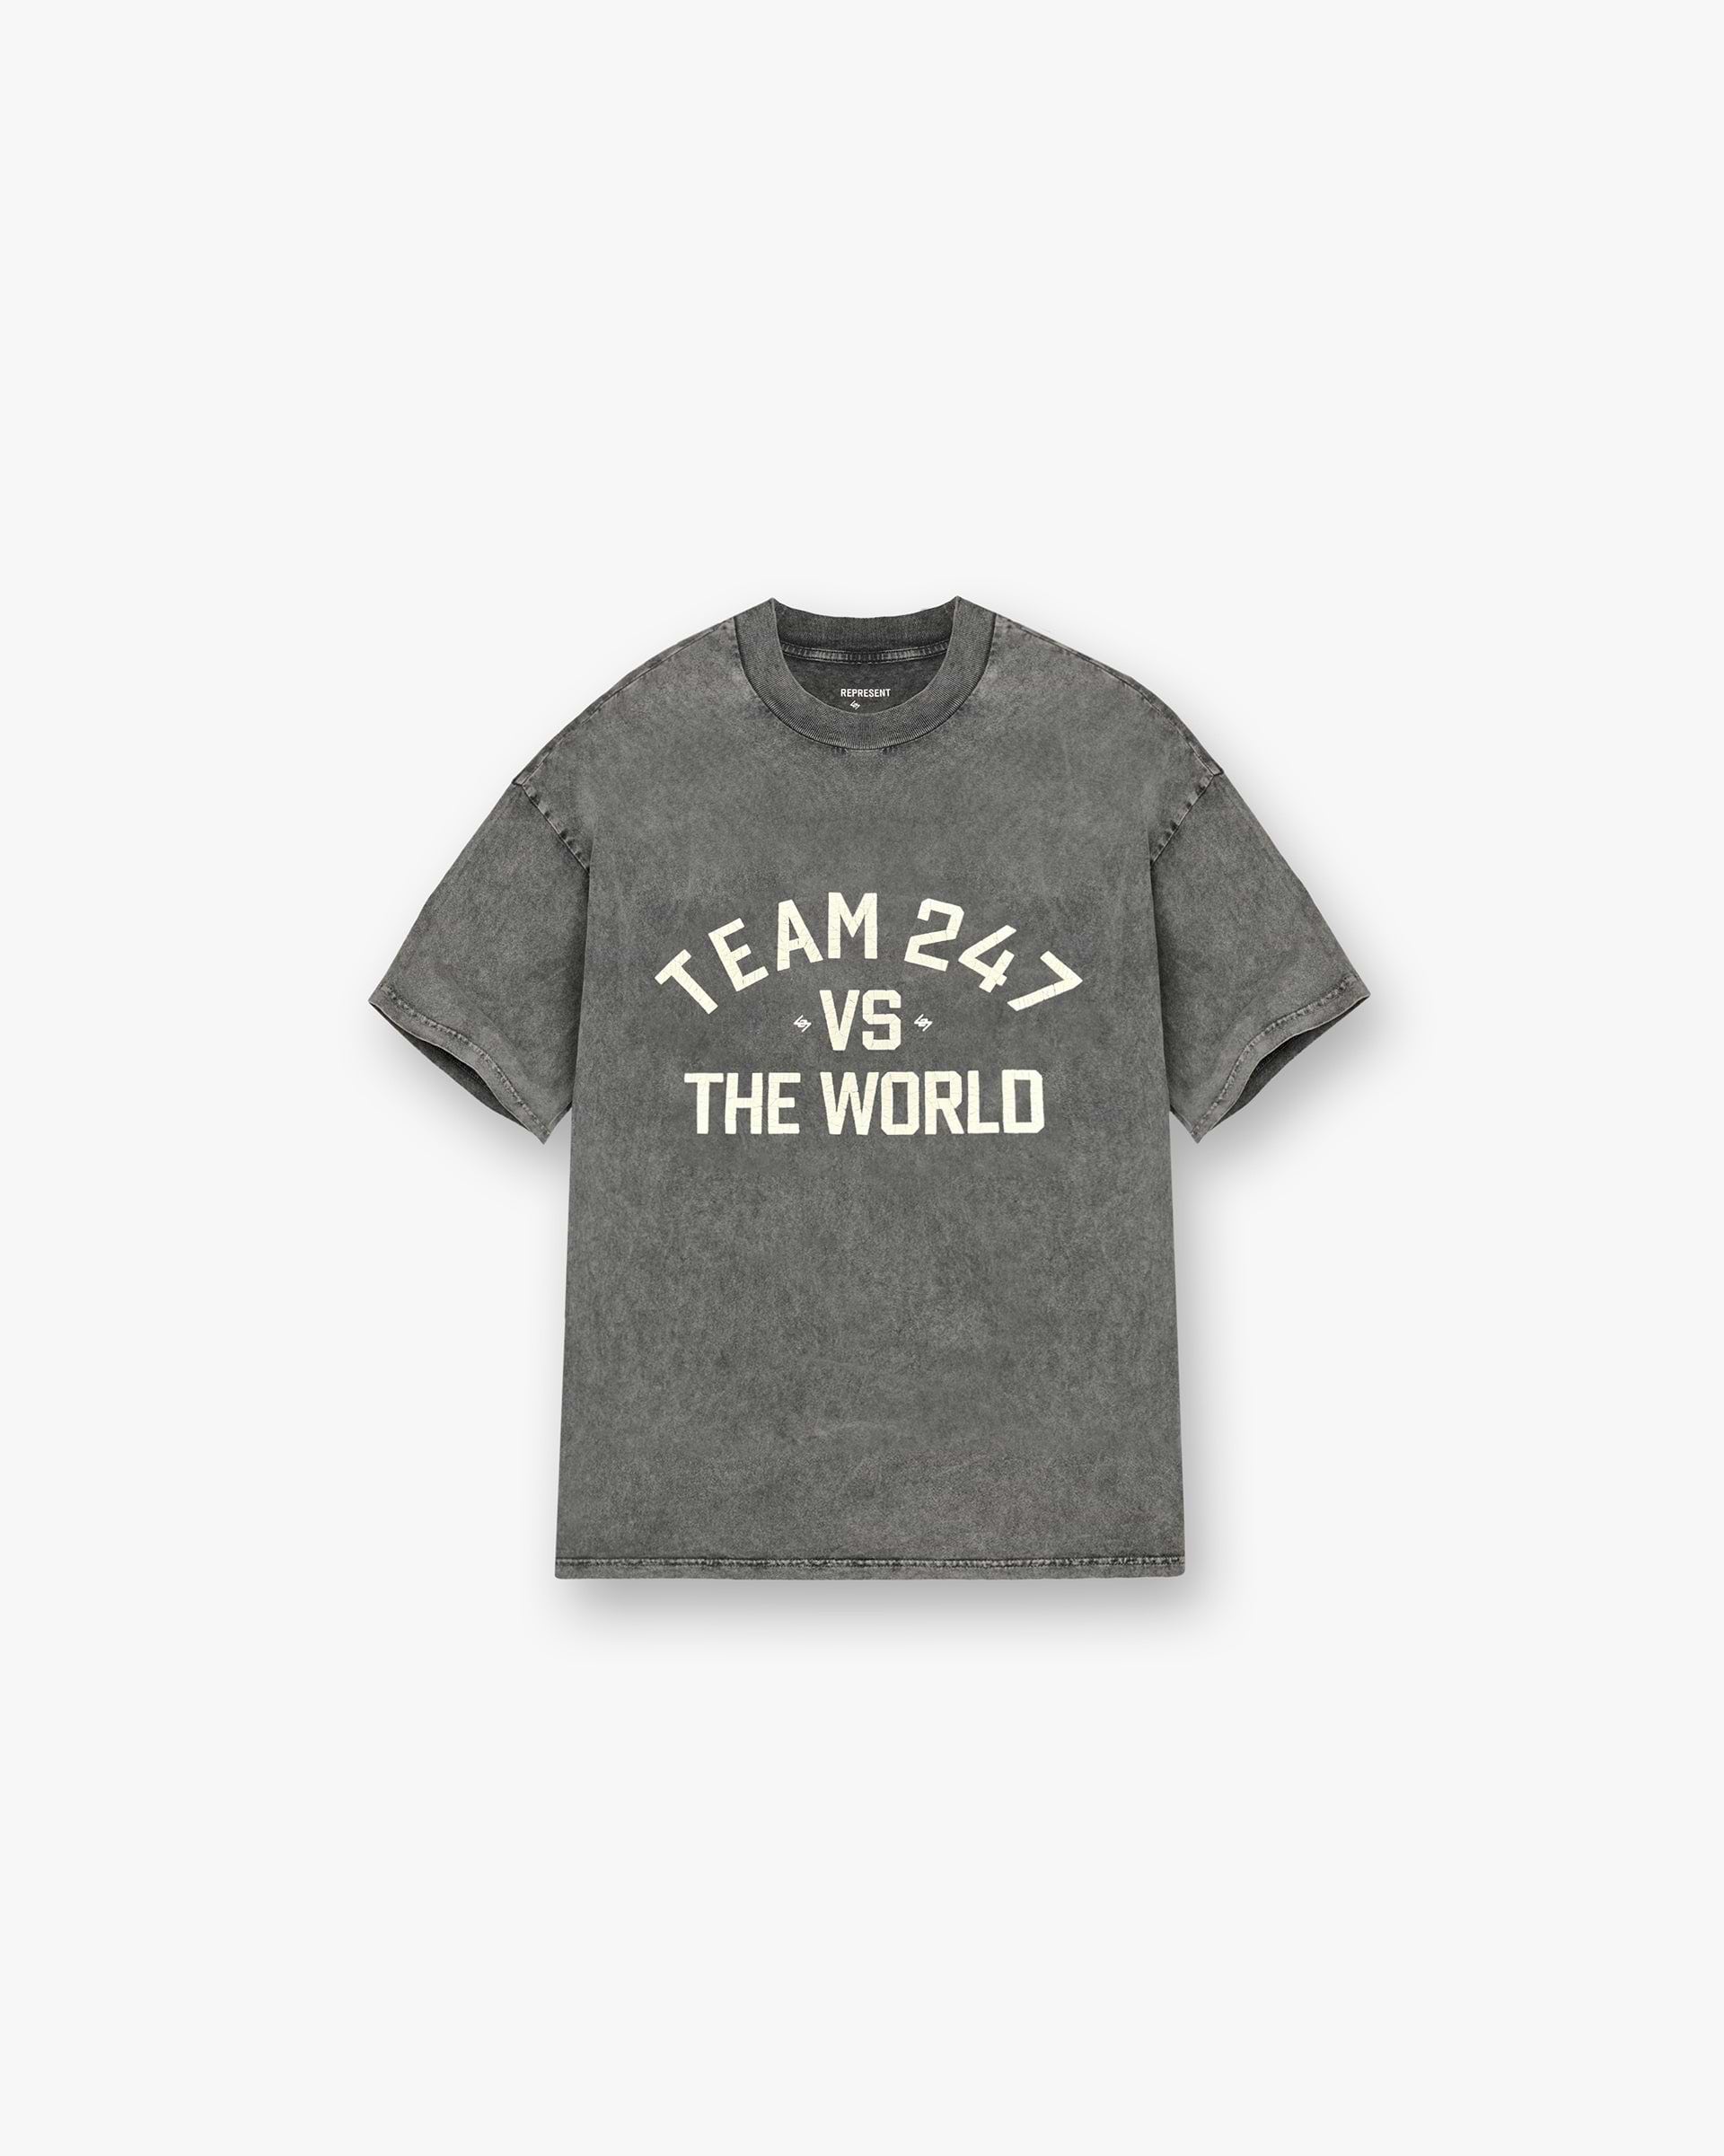 247 Vs The World T-Shirt - Pewter